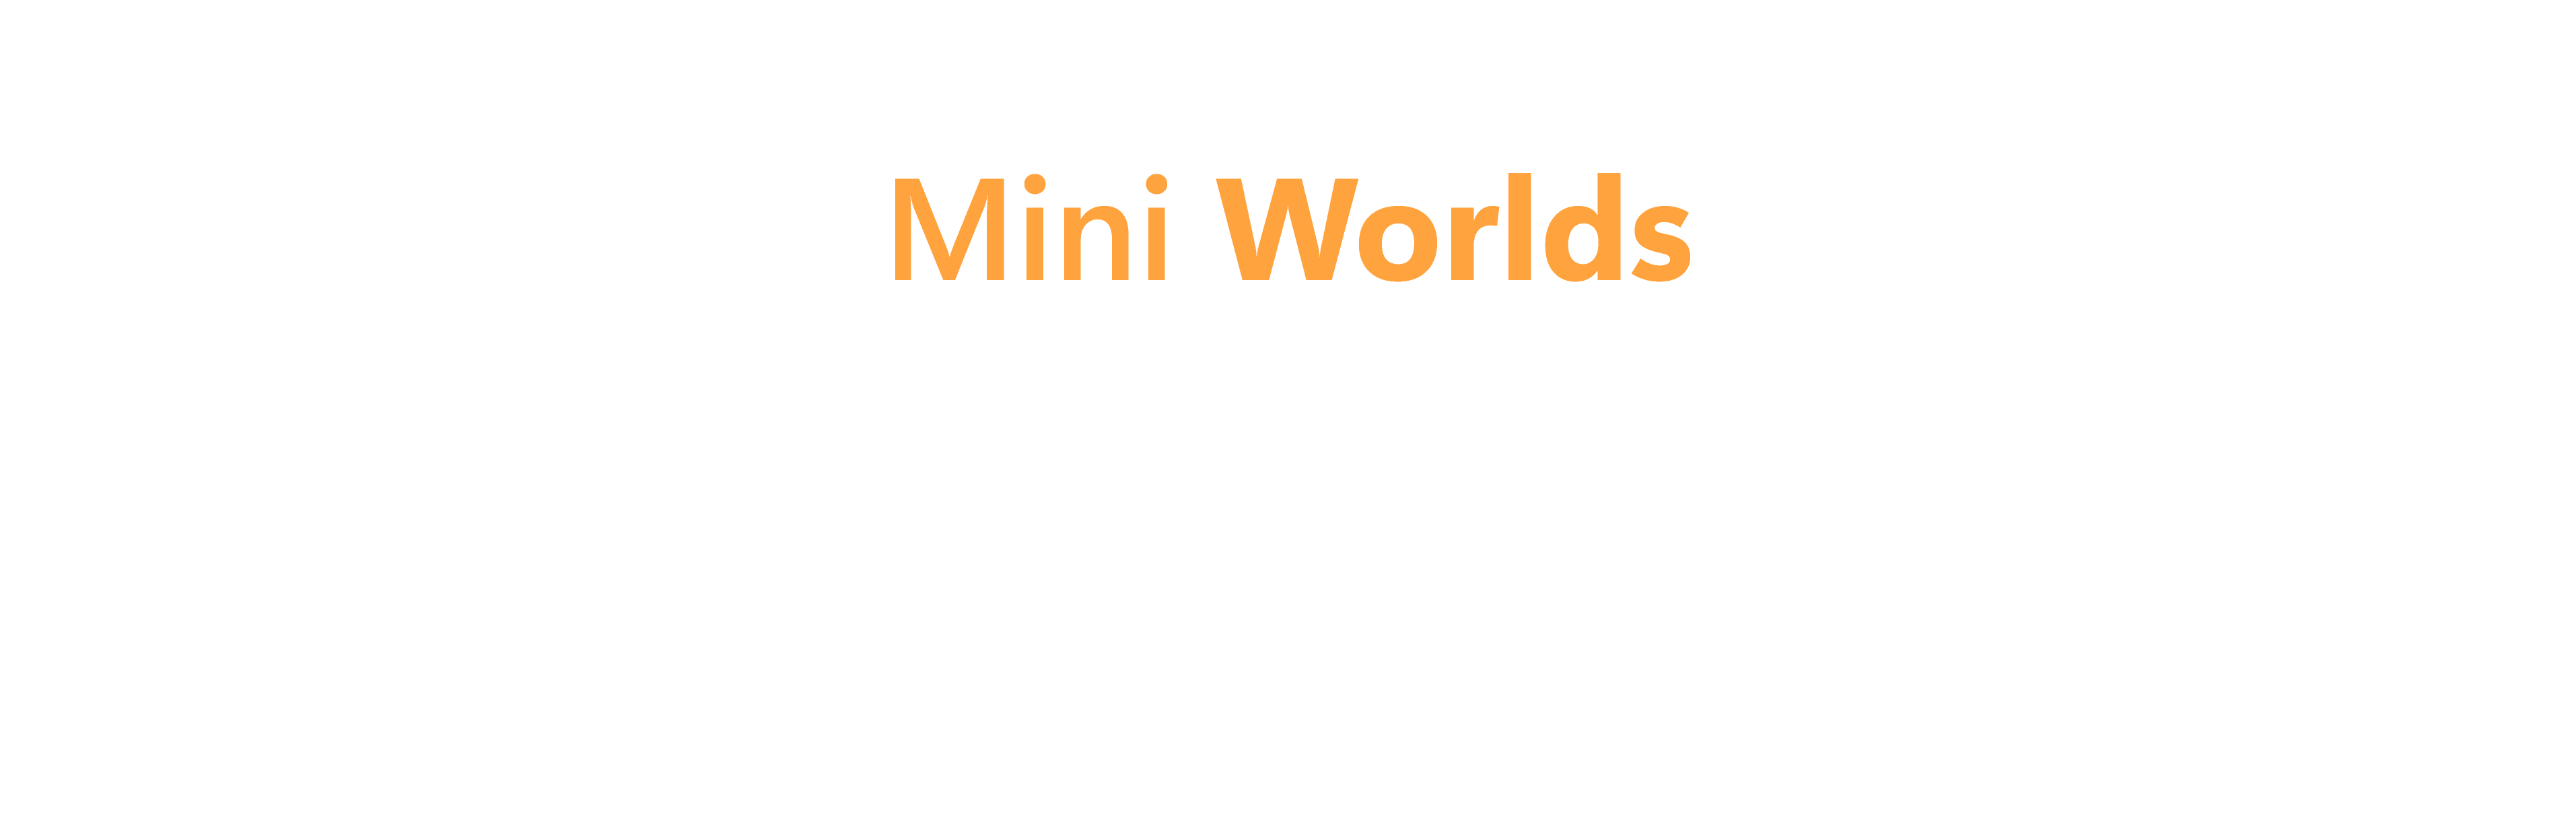 Mini Worlds